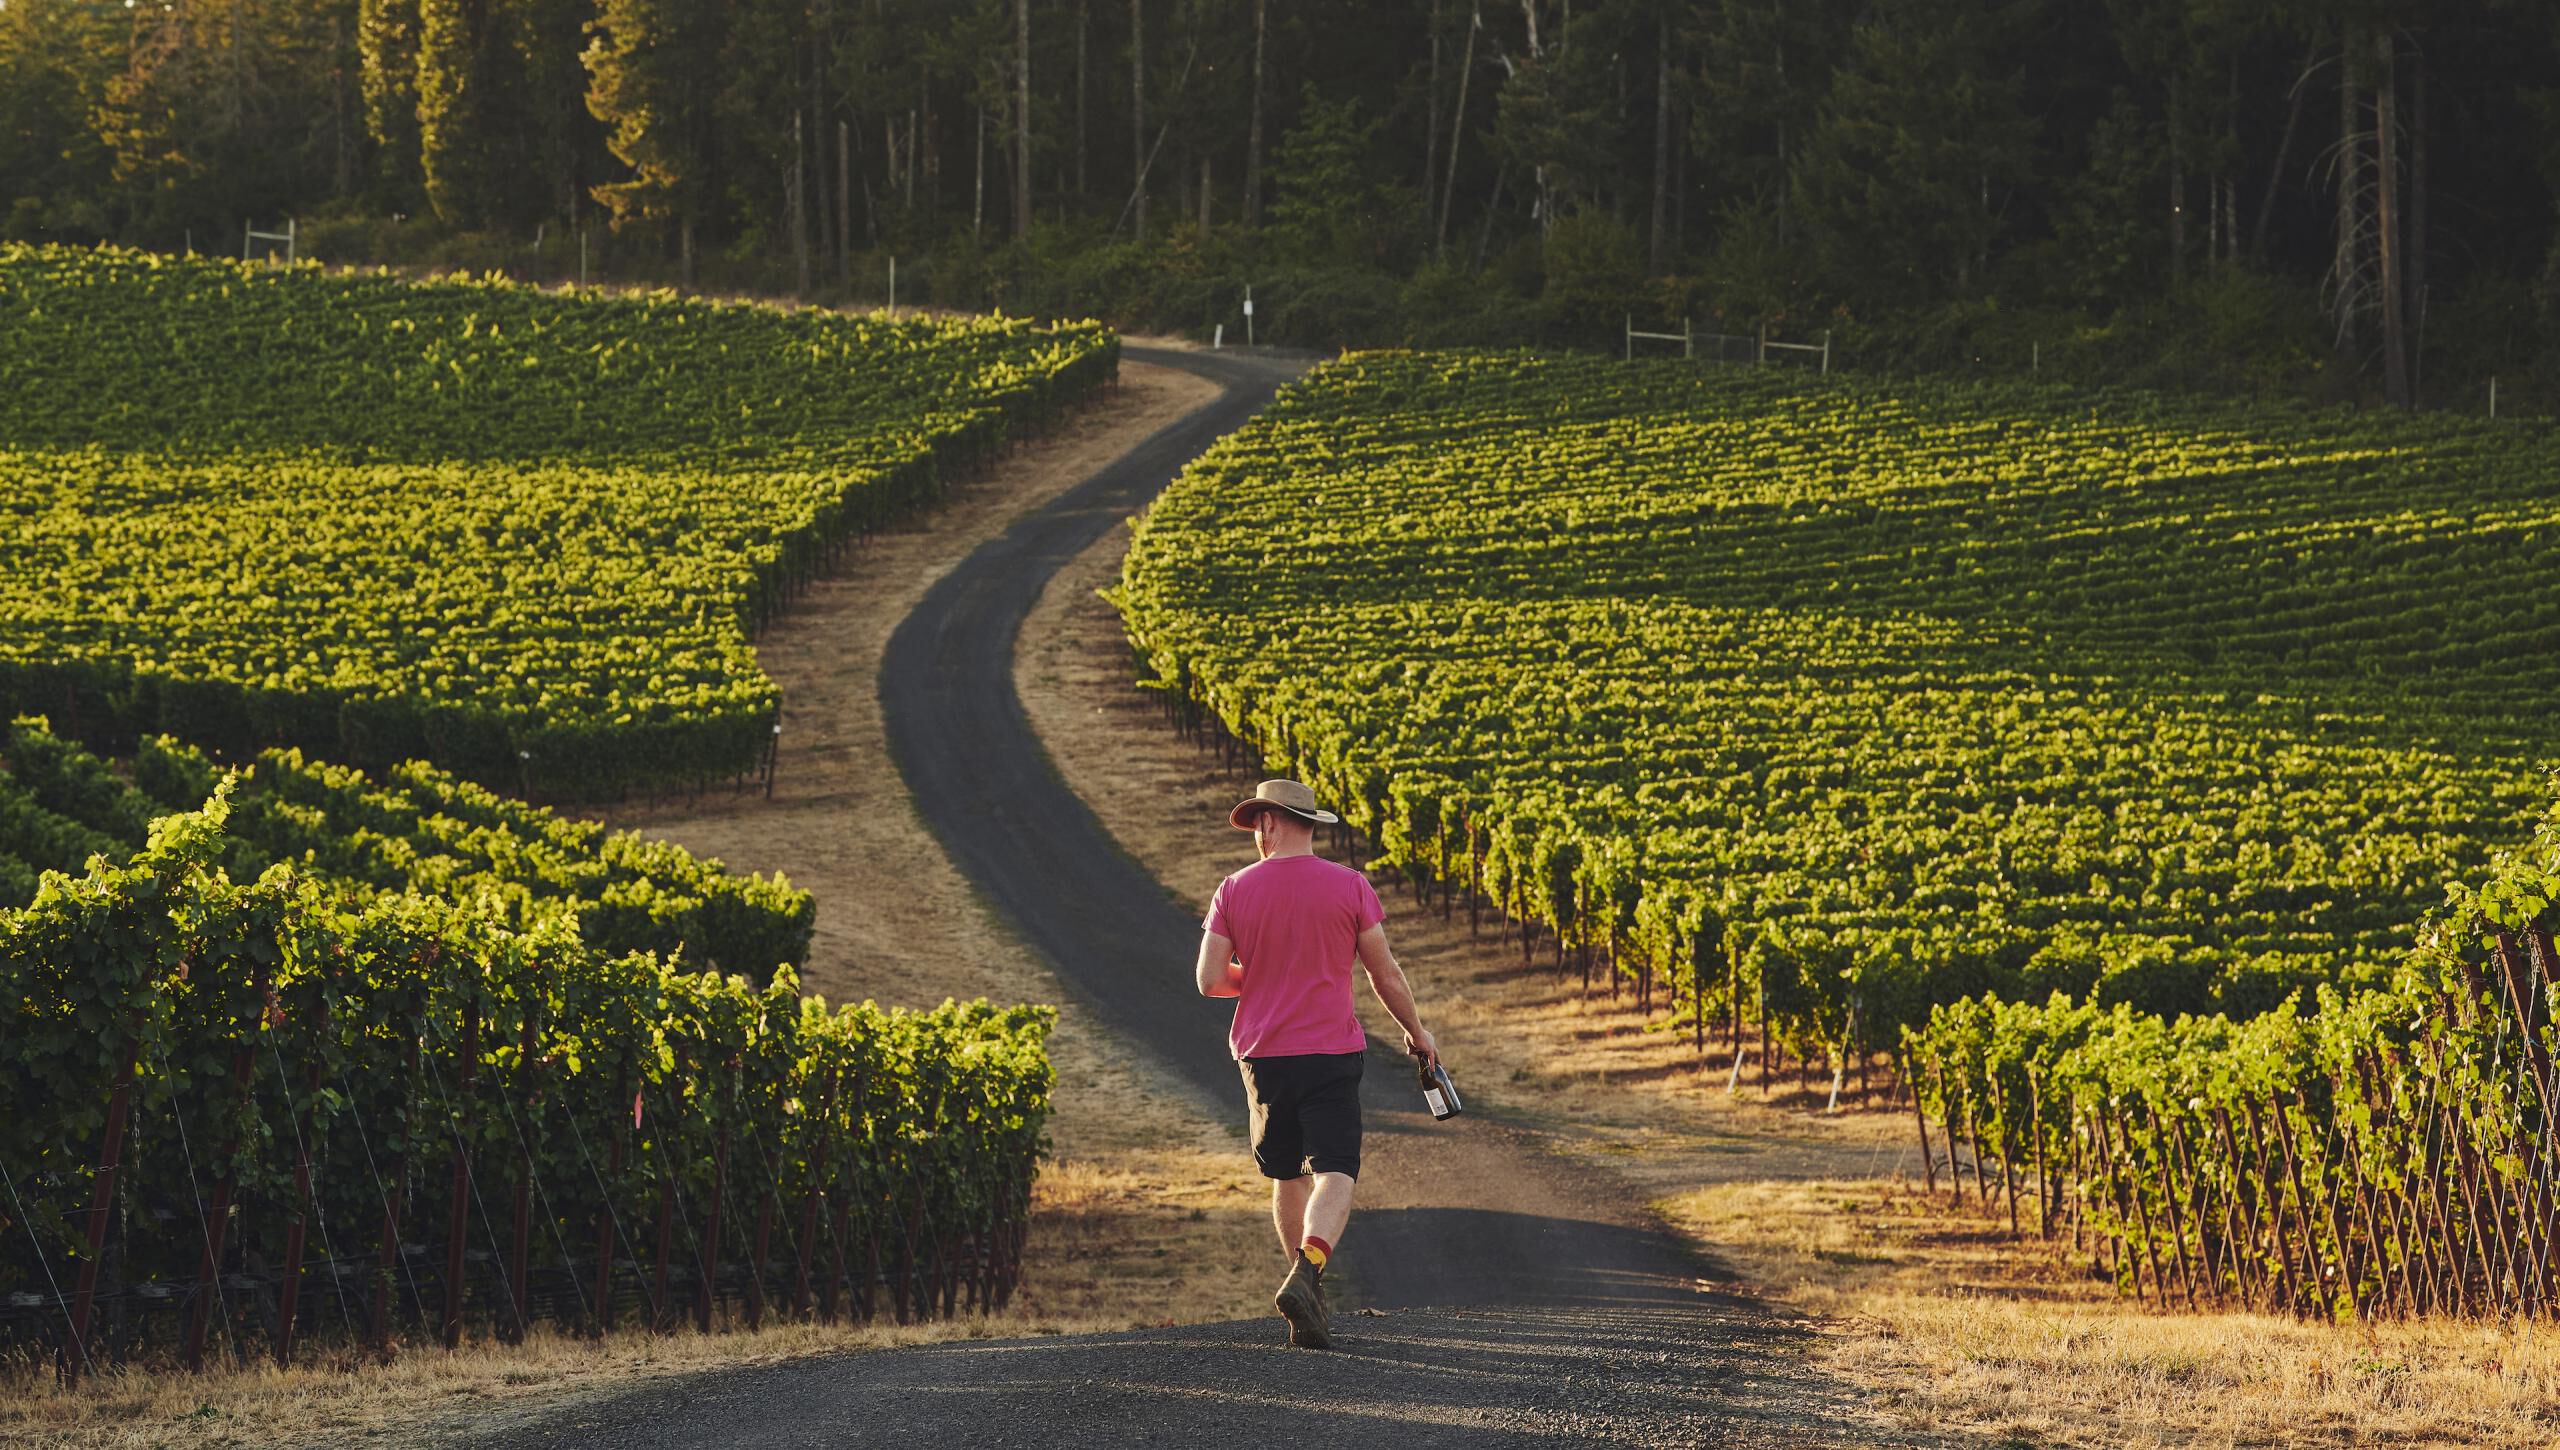 Man with a pink shirt walking through a vineyard holding a wine bottle